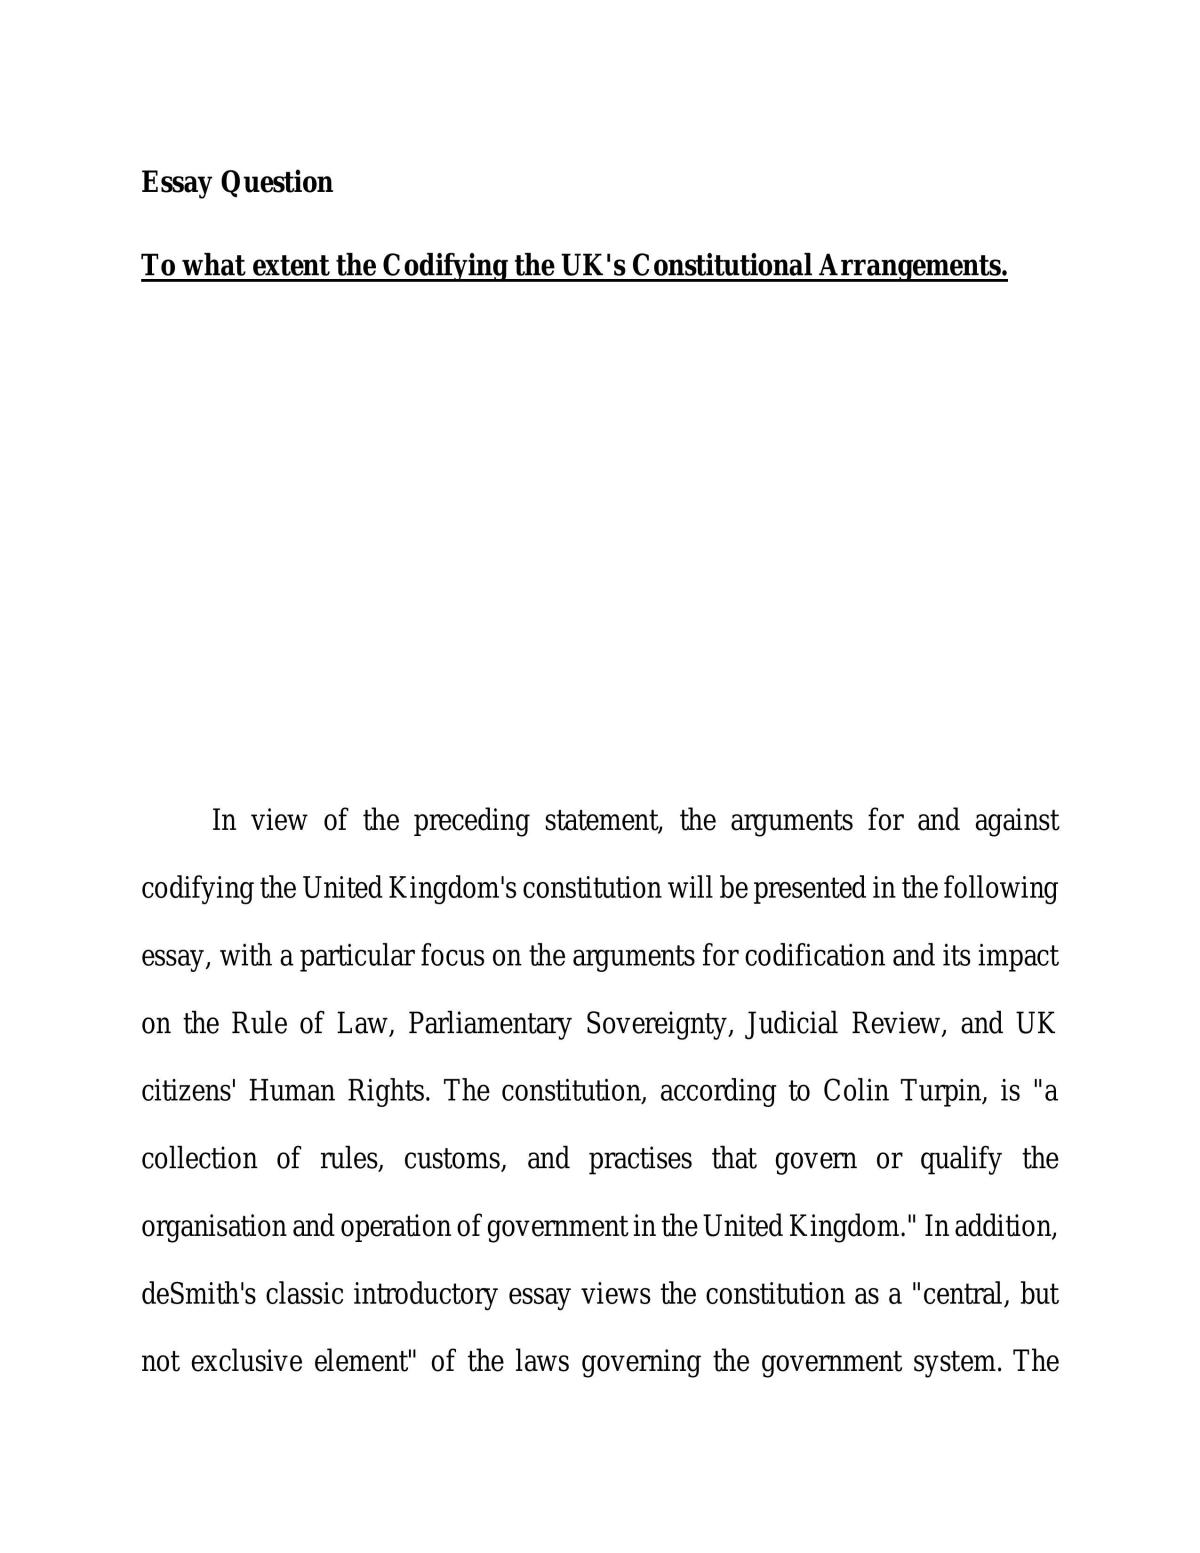 Codifying UK Constitutional Arrangements - Page 1